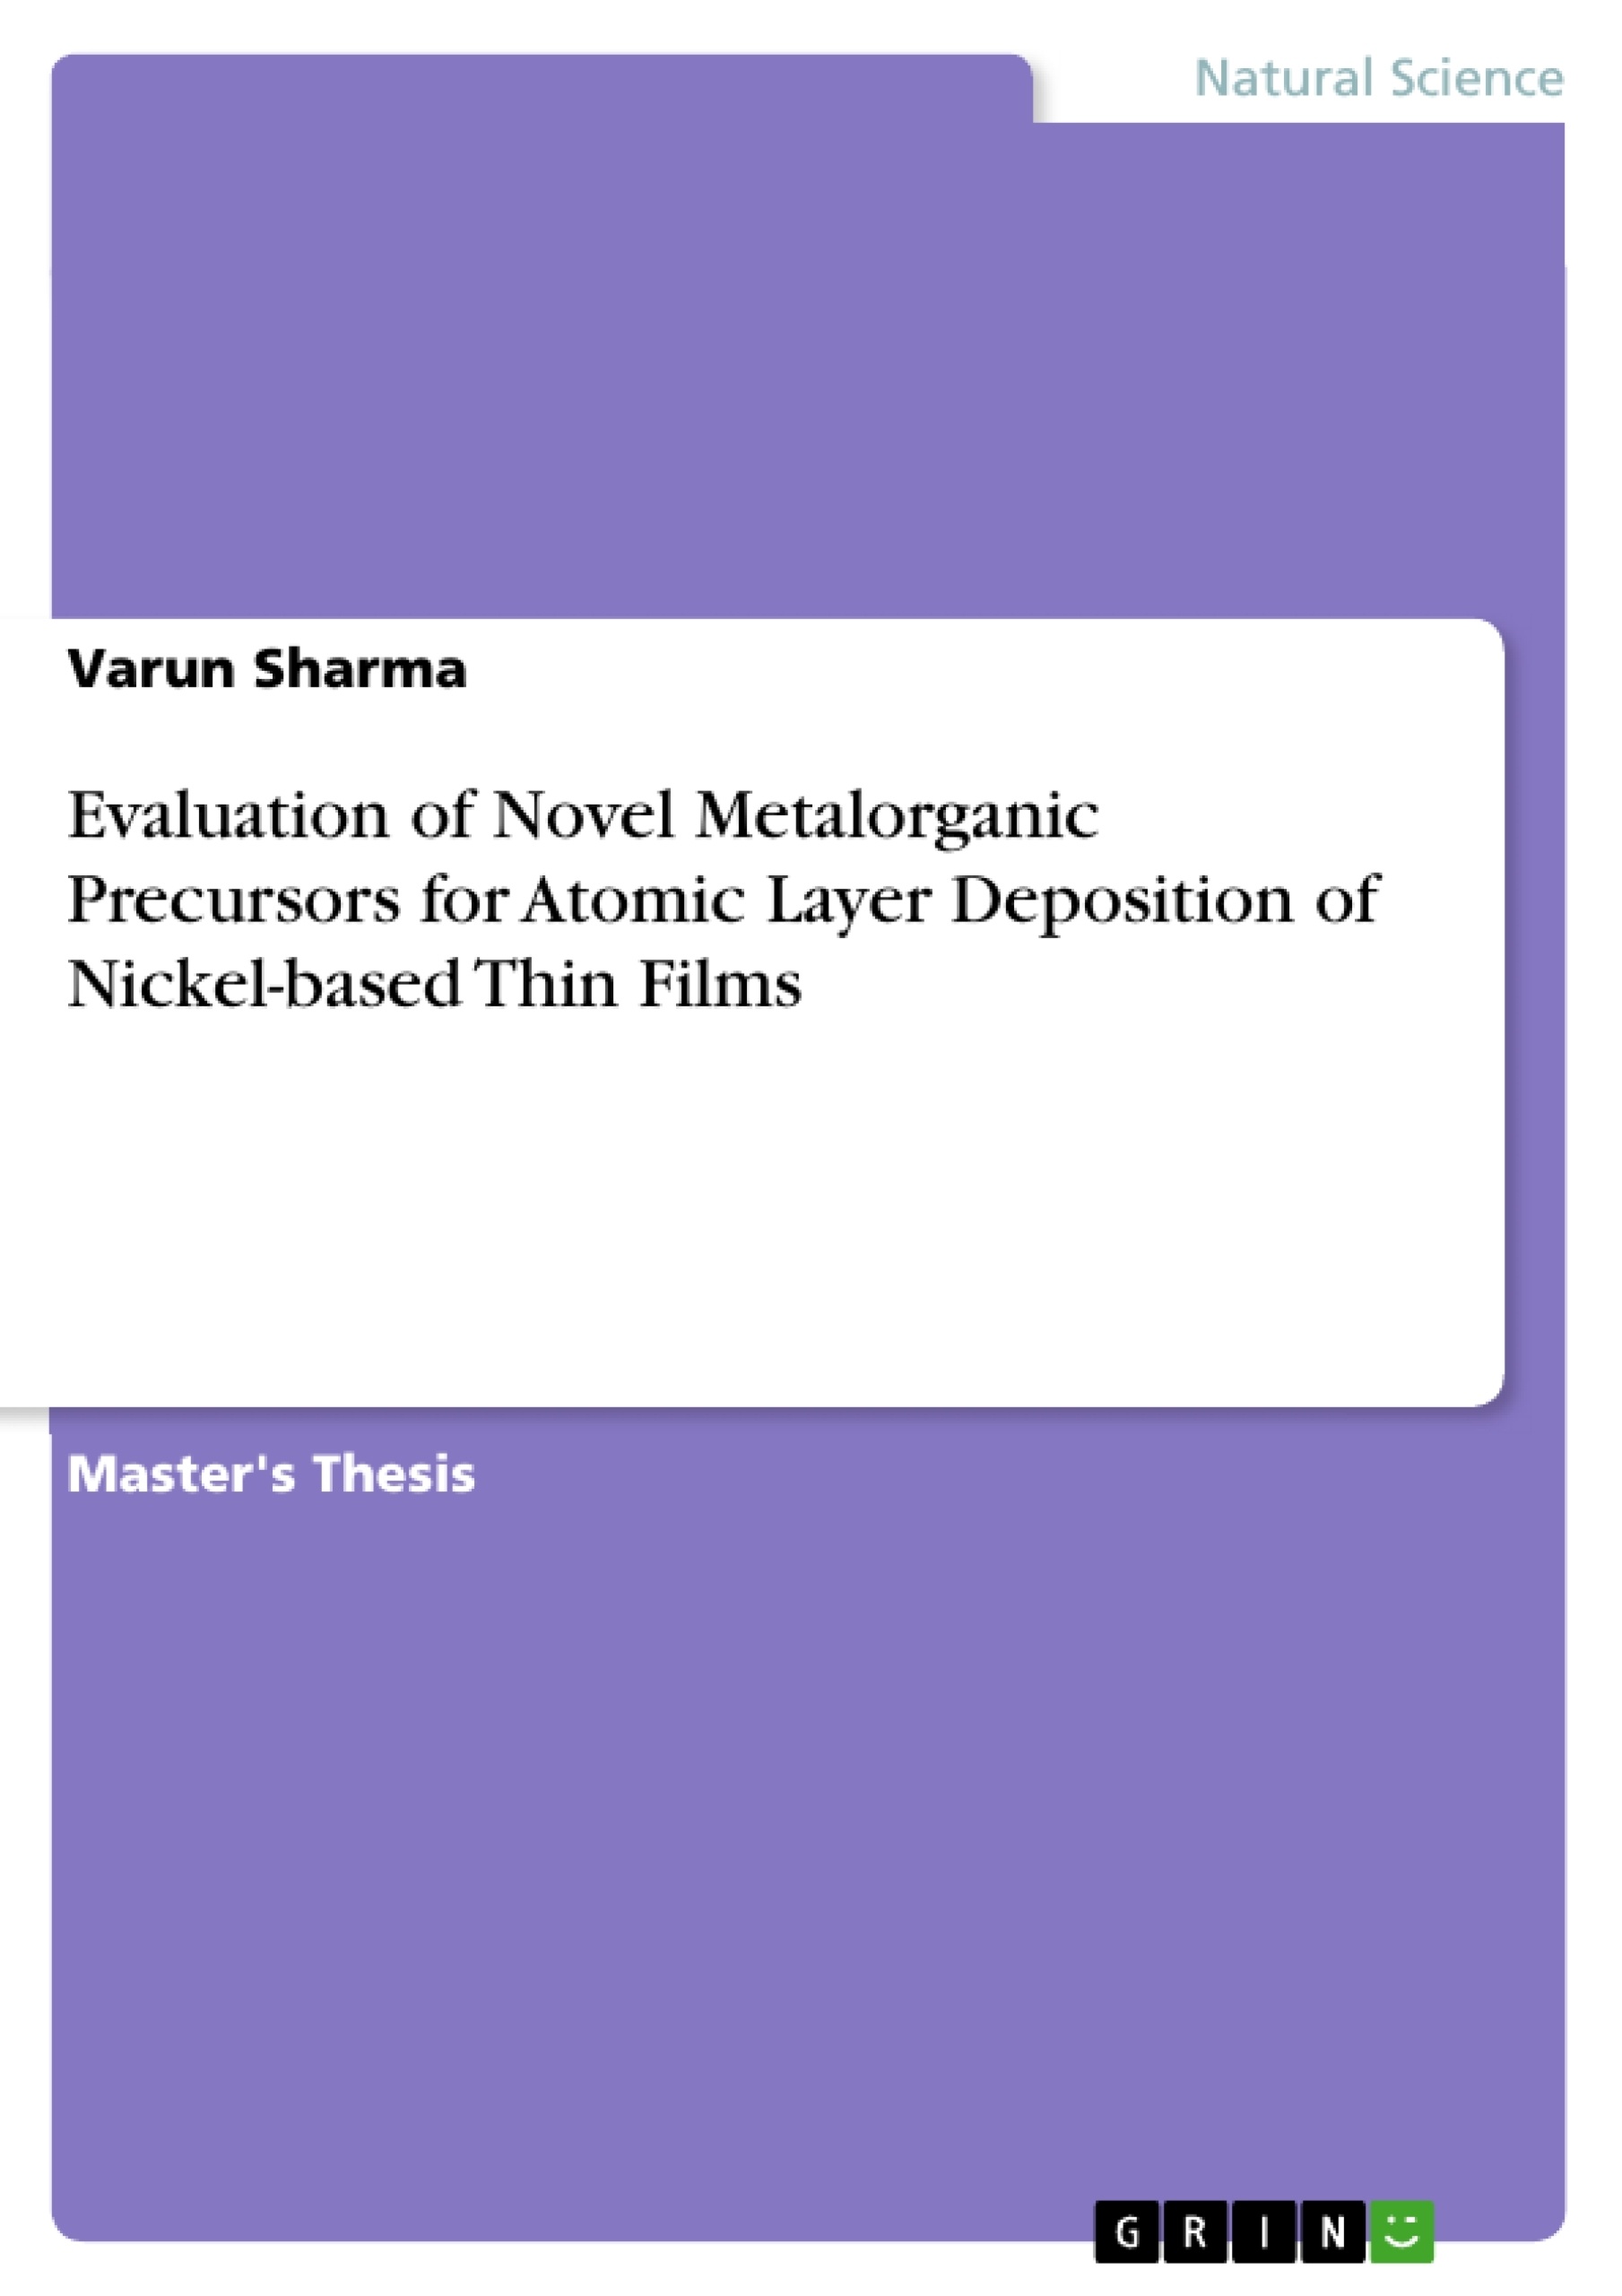 Title: Evaluation of Novel Metalorganic Precursors for Atomic Layer Deposition of Nickel-based Thin Films